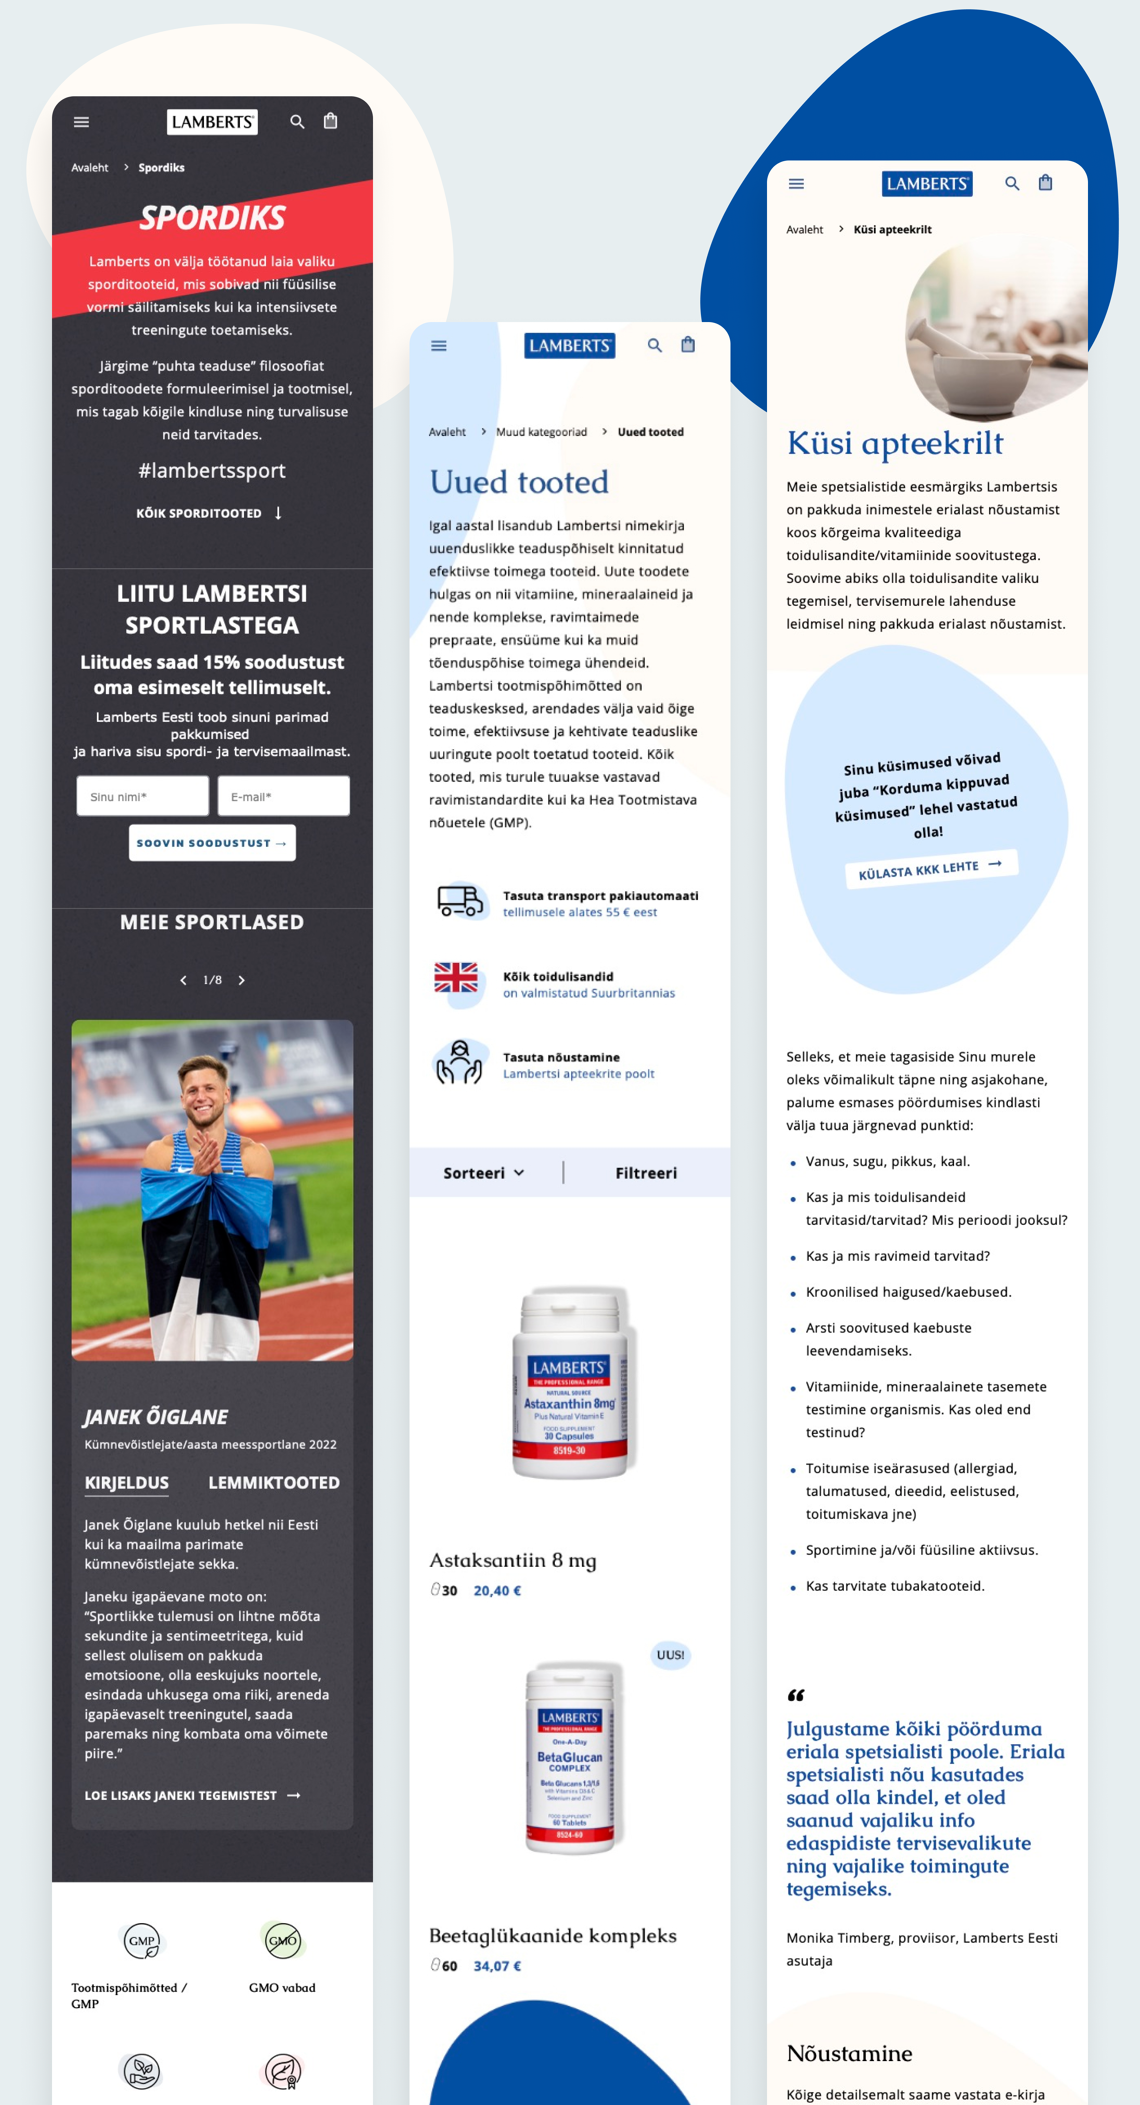 The Lamberts Baltics' website transformation